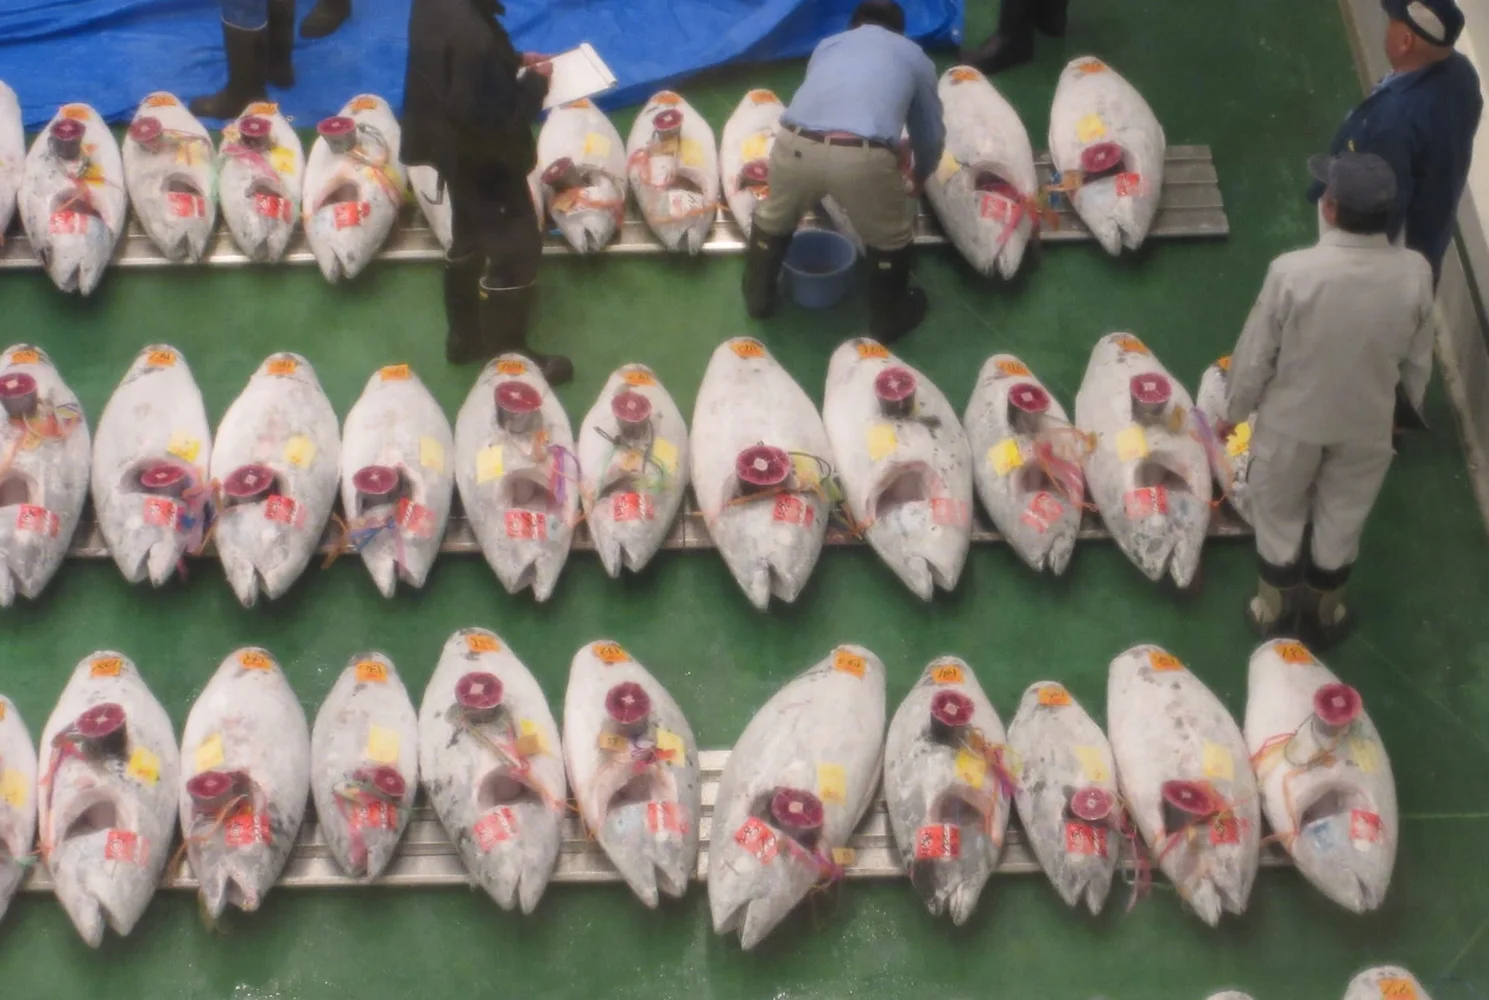 An Amazing Tuna Auction in Toyosu Market and Tsukiji Outer Market Tour